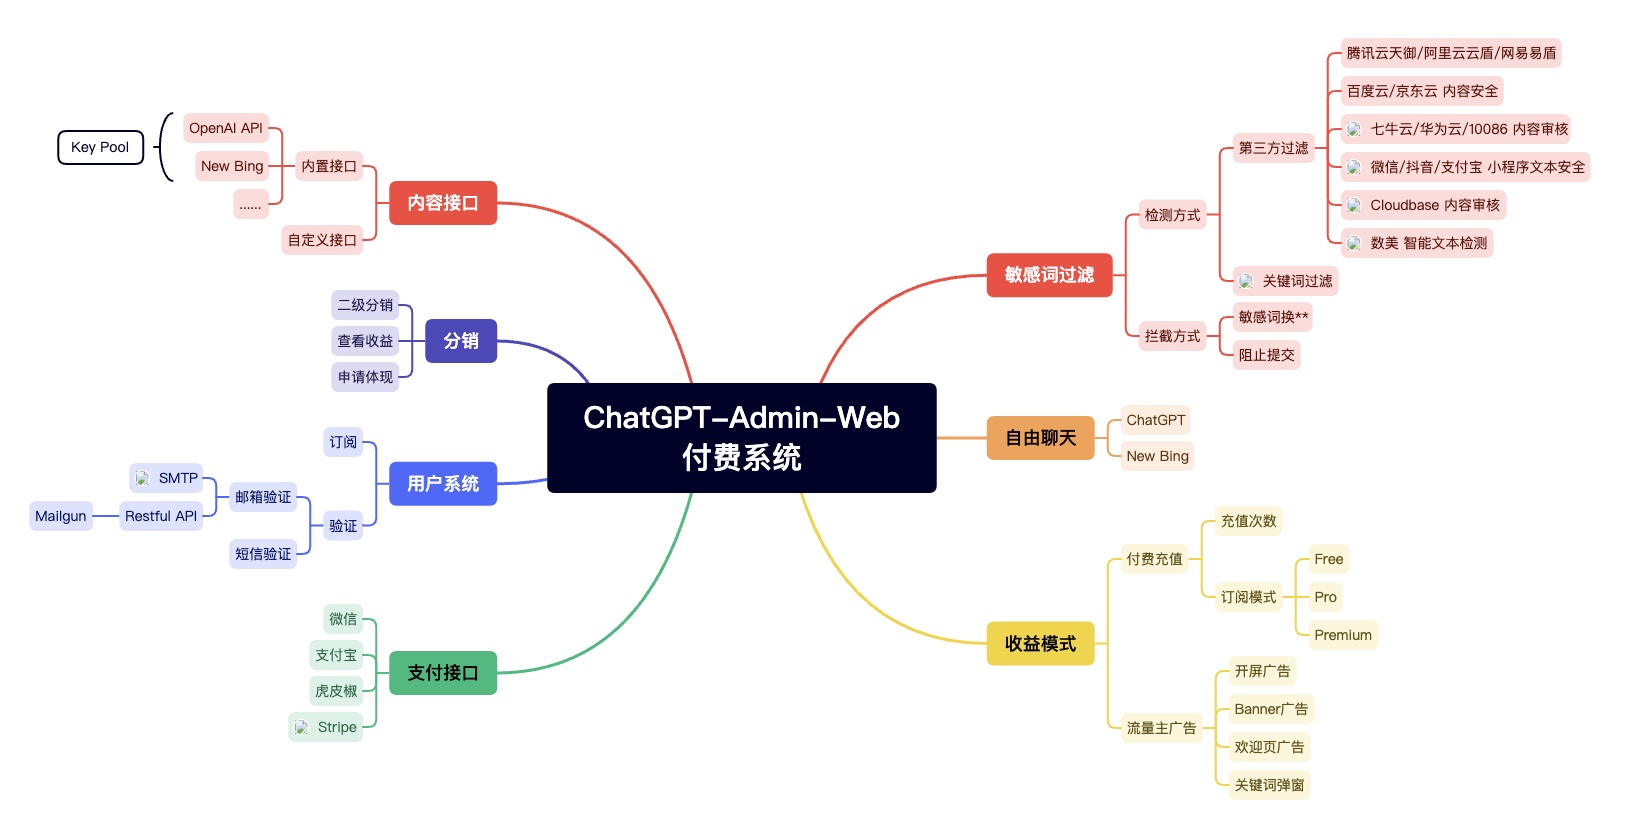 ChatGPT-Admin-Web